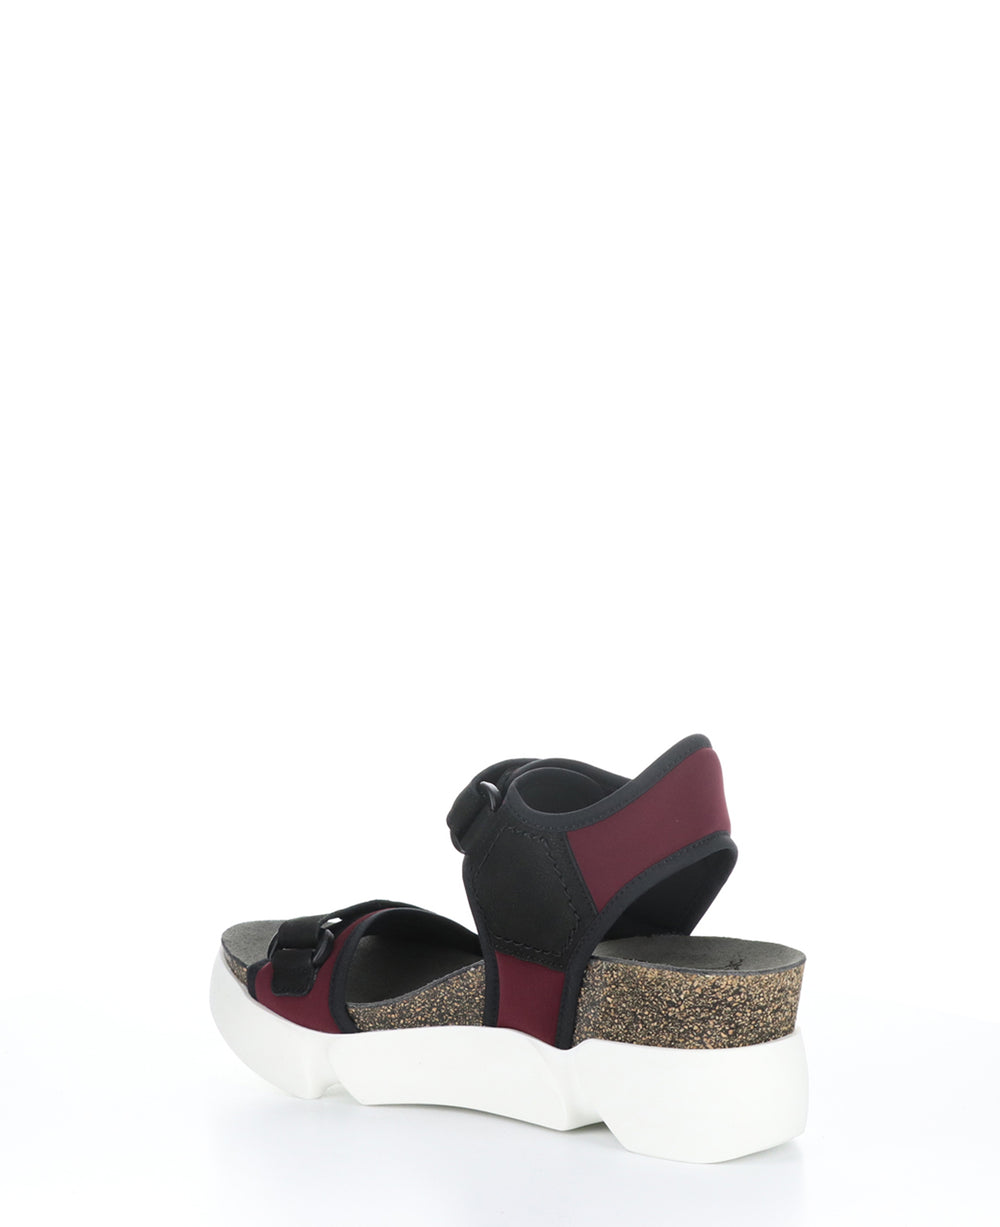 SIGO727FLY BORDEAUX/BLACK Wedge Sandals|SIGO727FLY Chaussures à Bout Rond in Violet